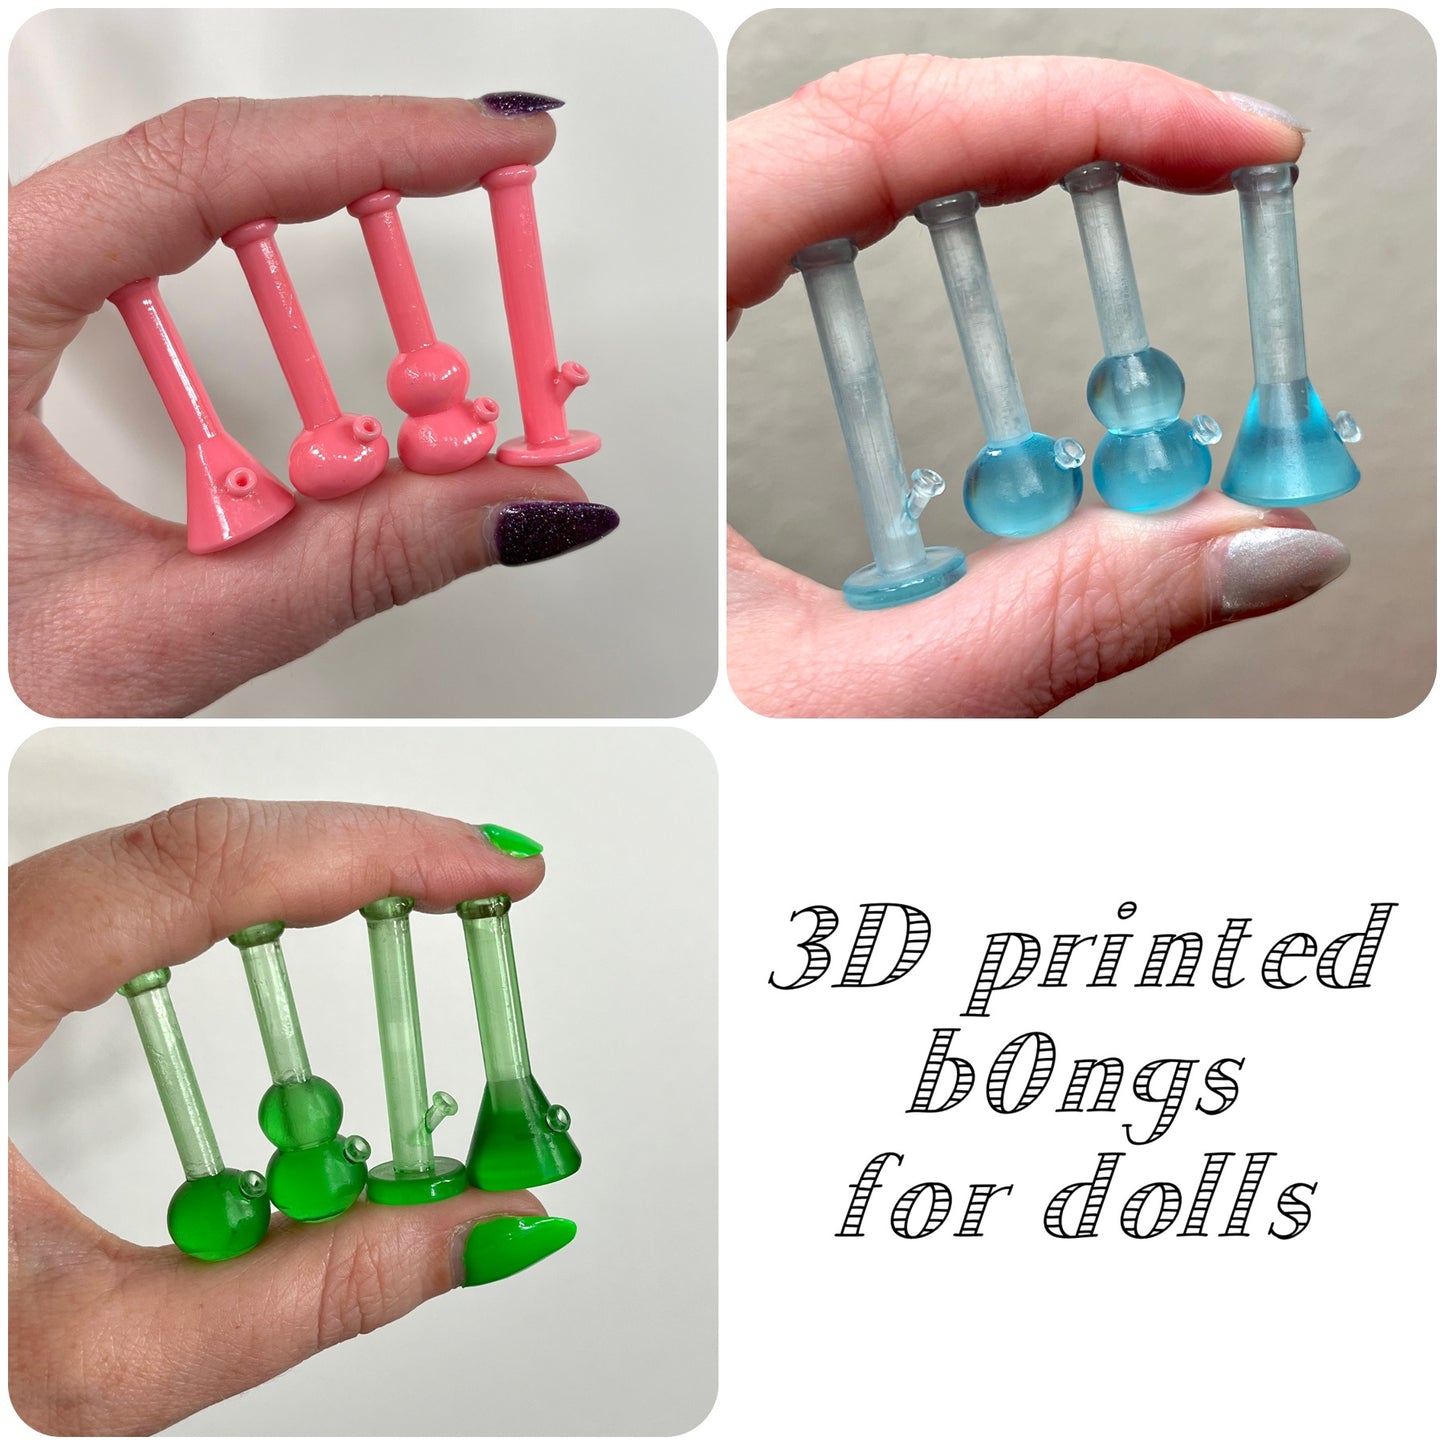 3D printed RESIN sculptures